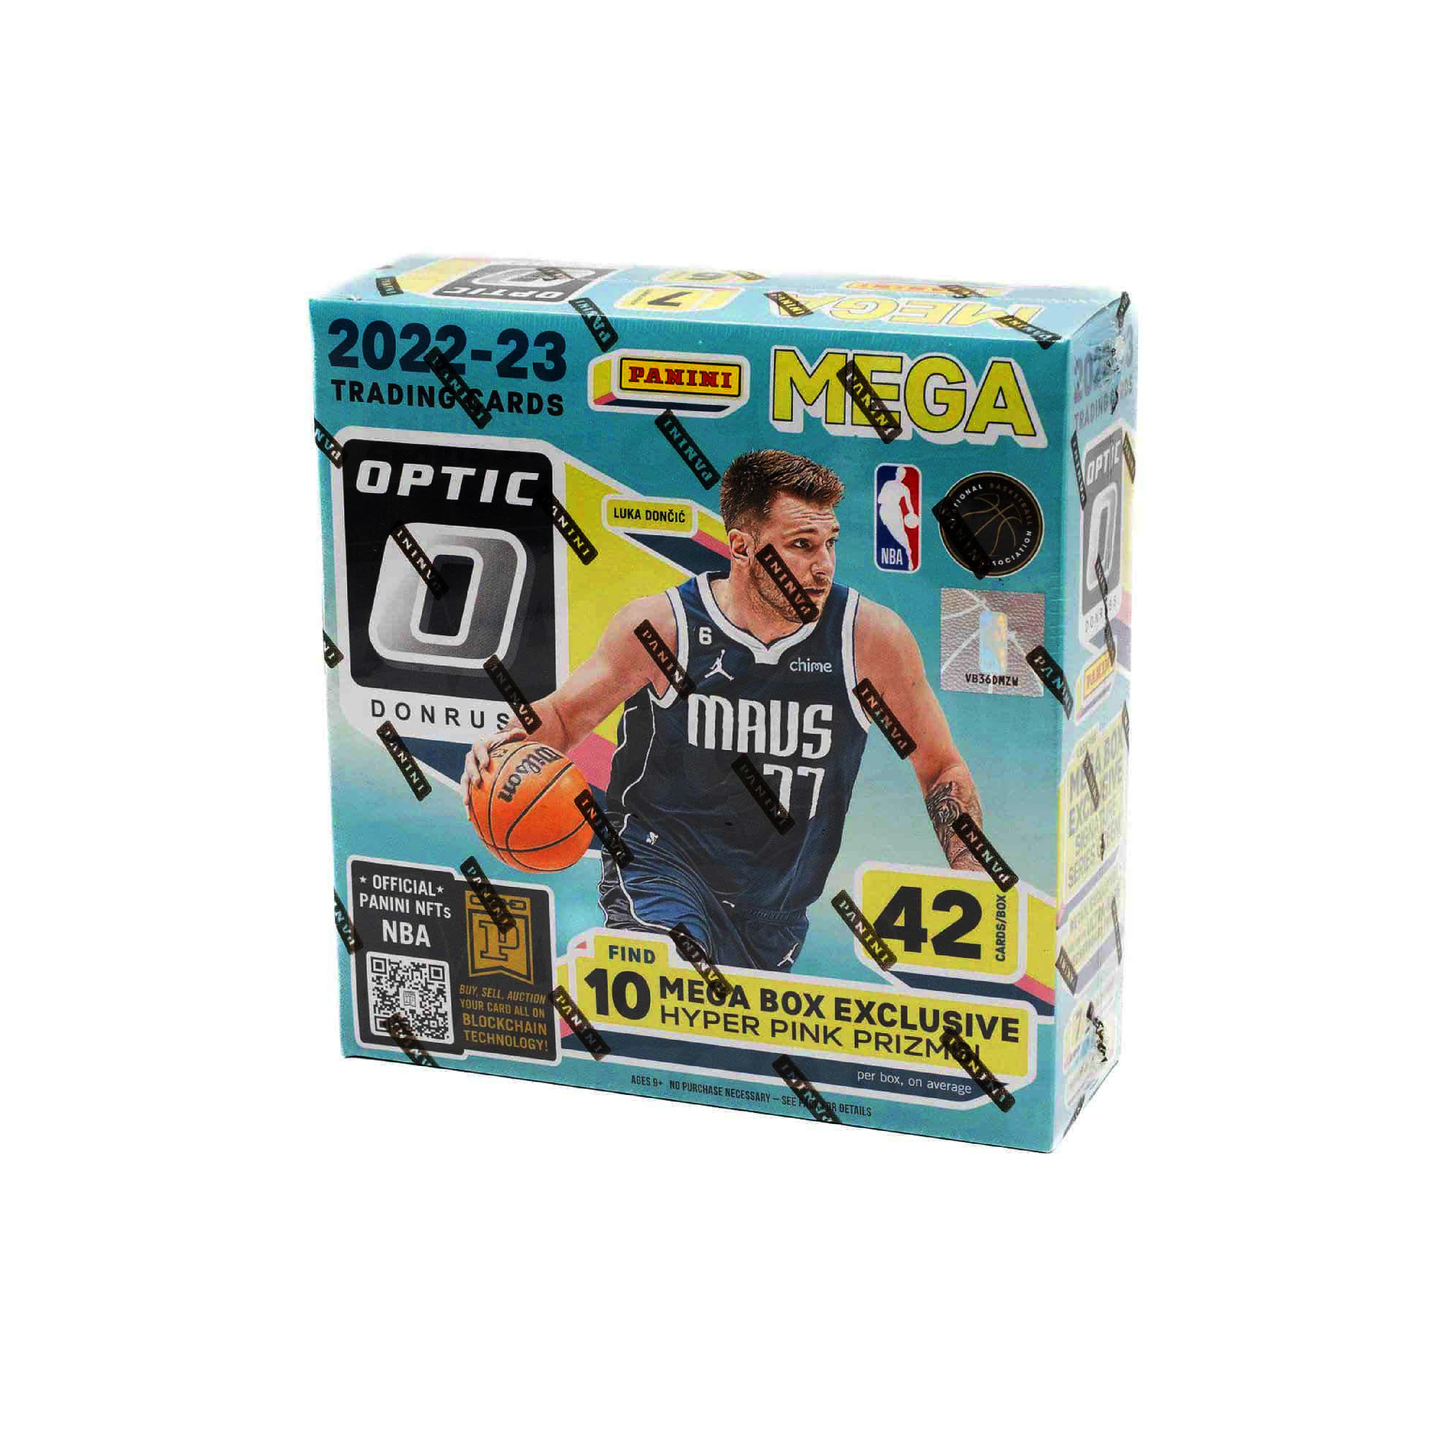 2022-23 Donruss Optic Fanatics Mega Basketball Trading Card Box